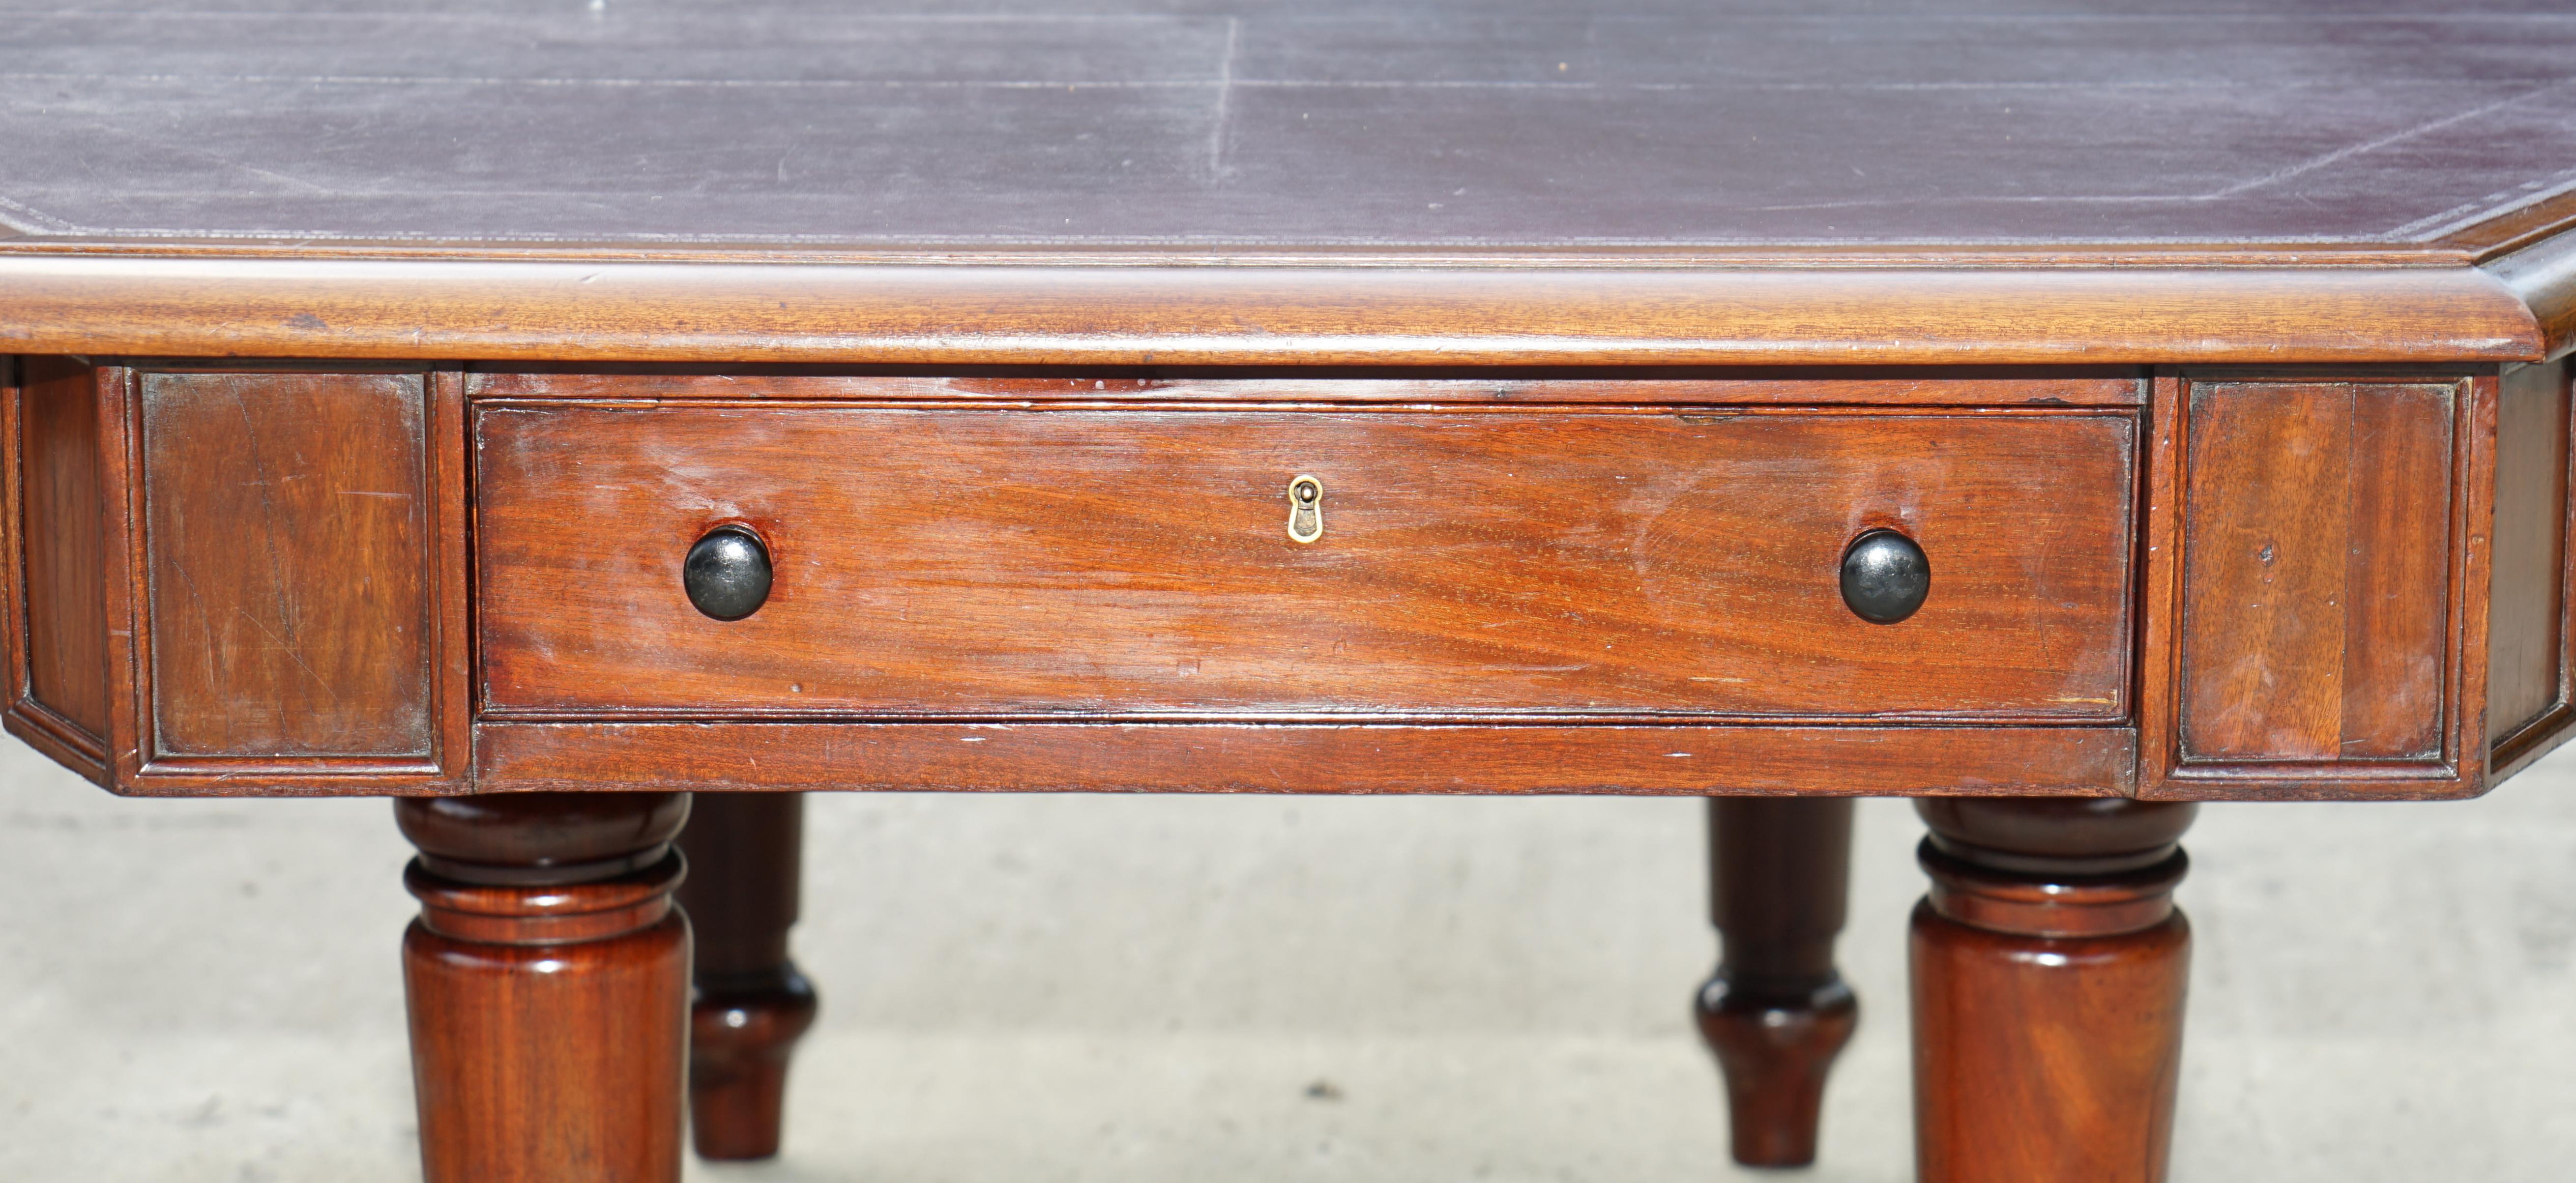 Massive Antique George III 1780 Hardwood Library Desk Table George Rex Locks For Sale 2